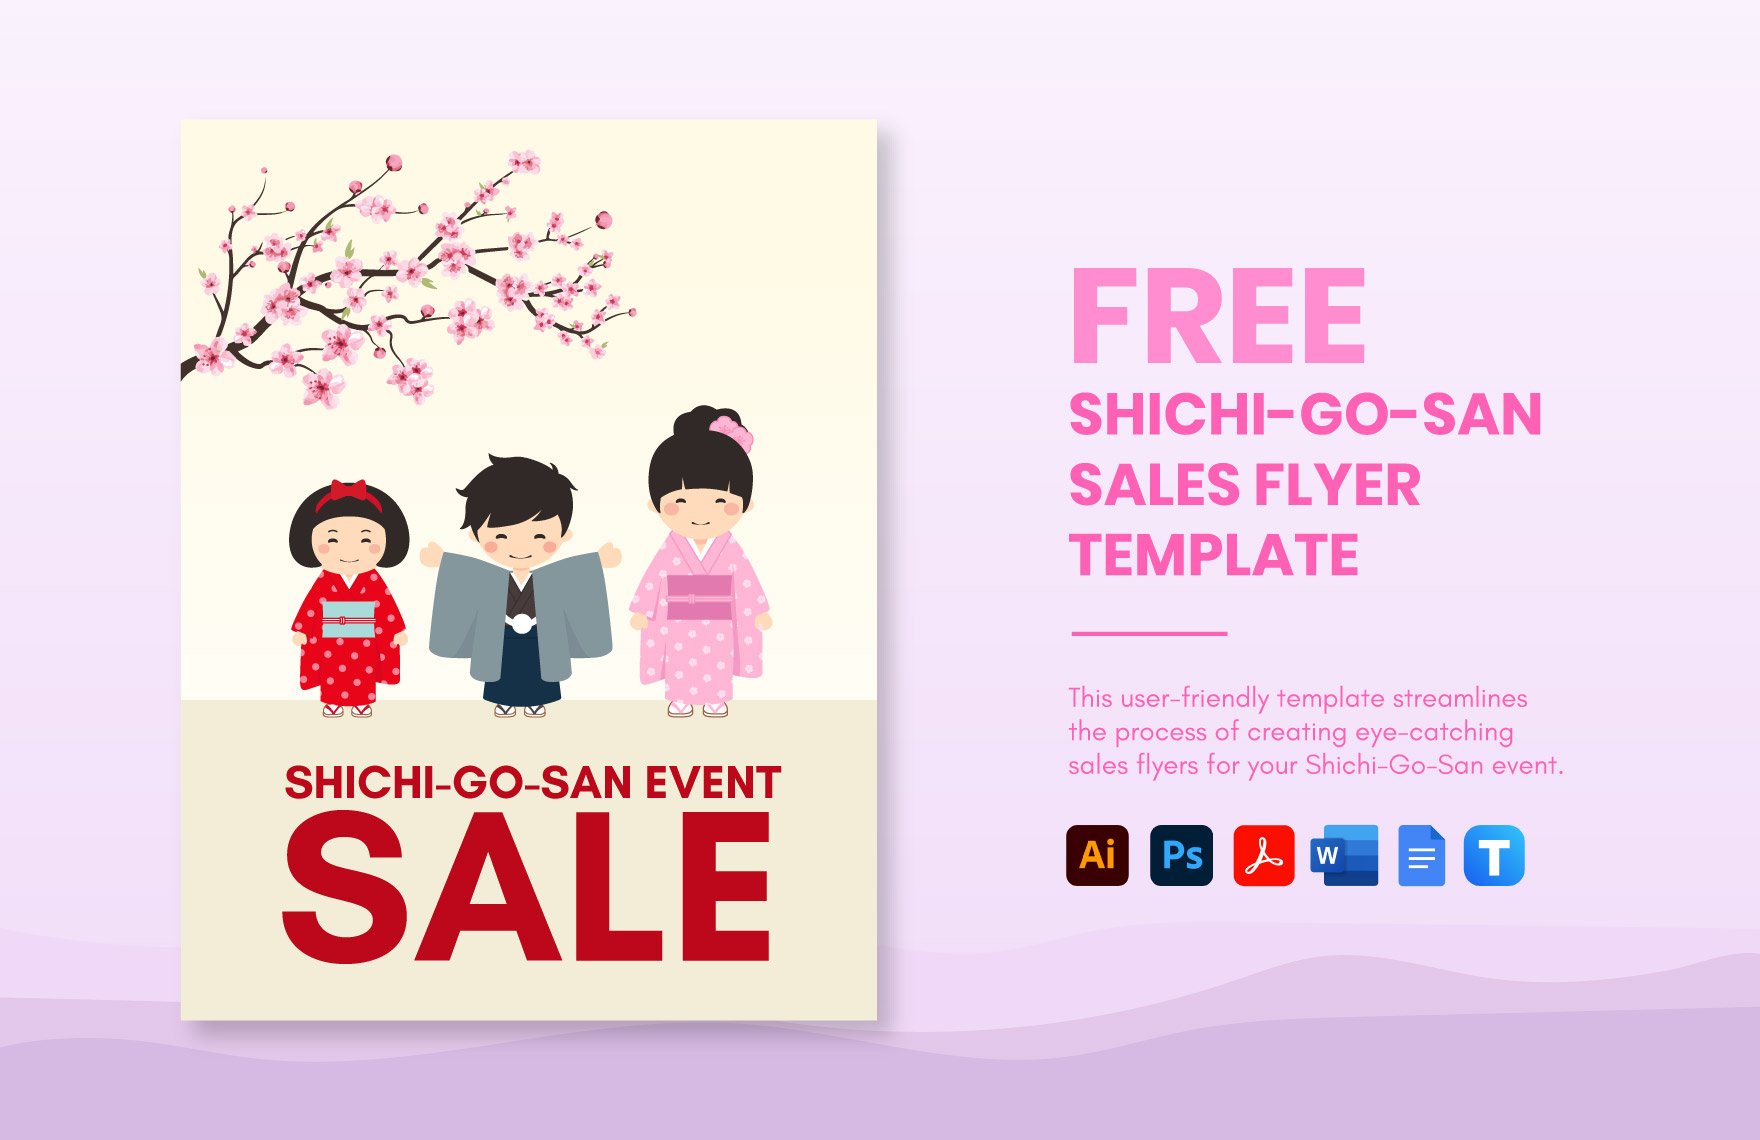 Free Shichi-Go-San Sales Flyer Template in Word, Google Docs, PDF, Illustrator, PSD